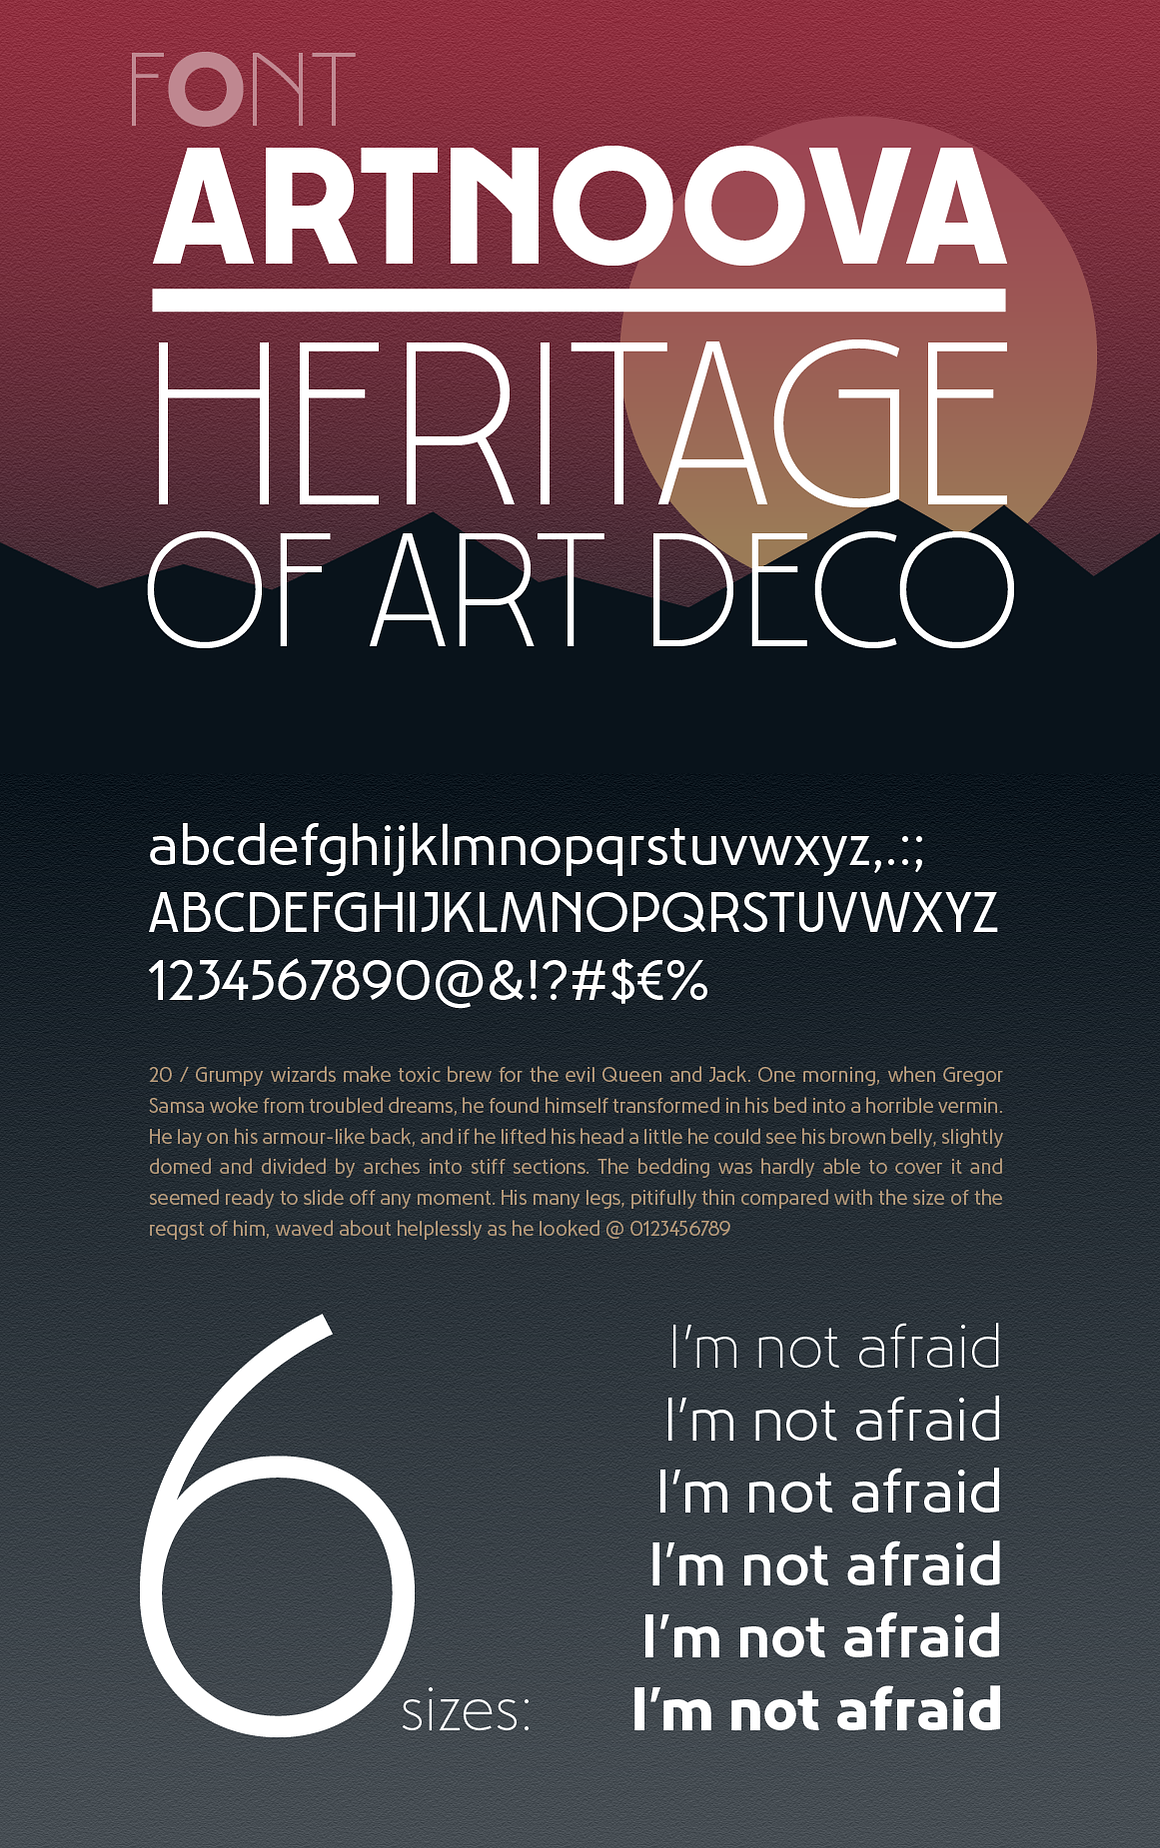 Artnoova font. Heritage of Art Deco 